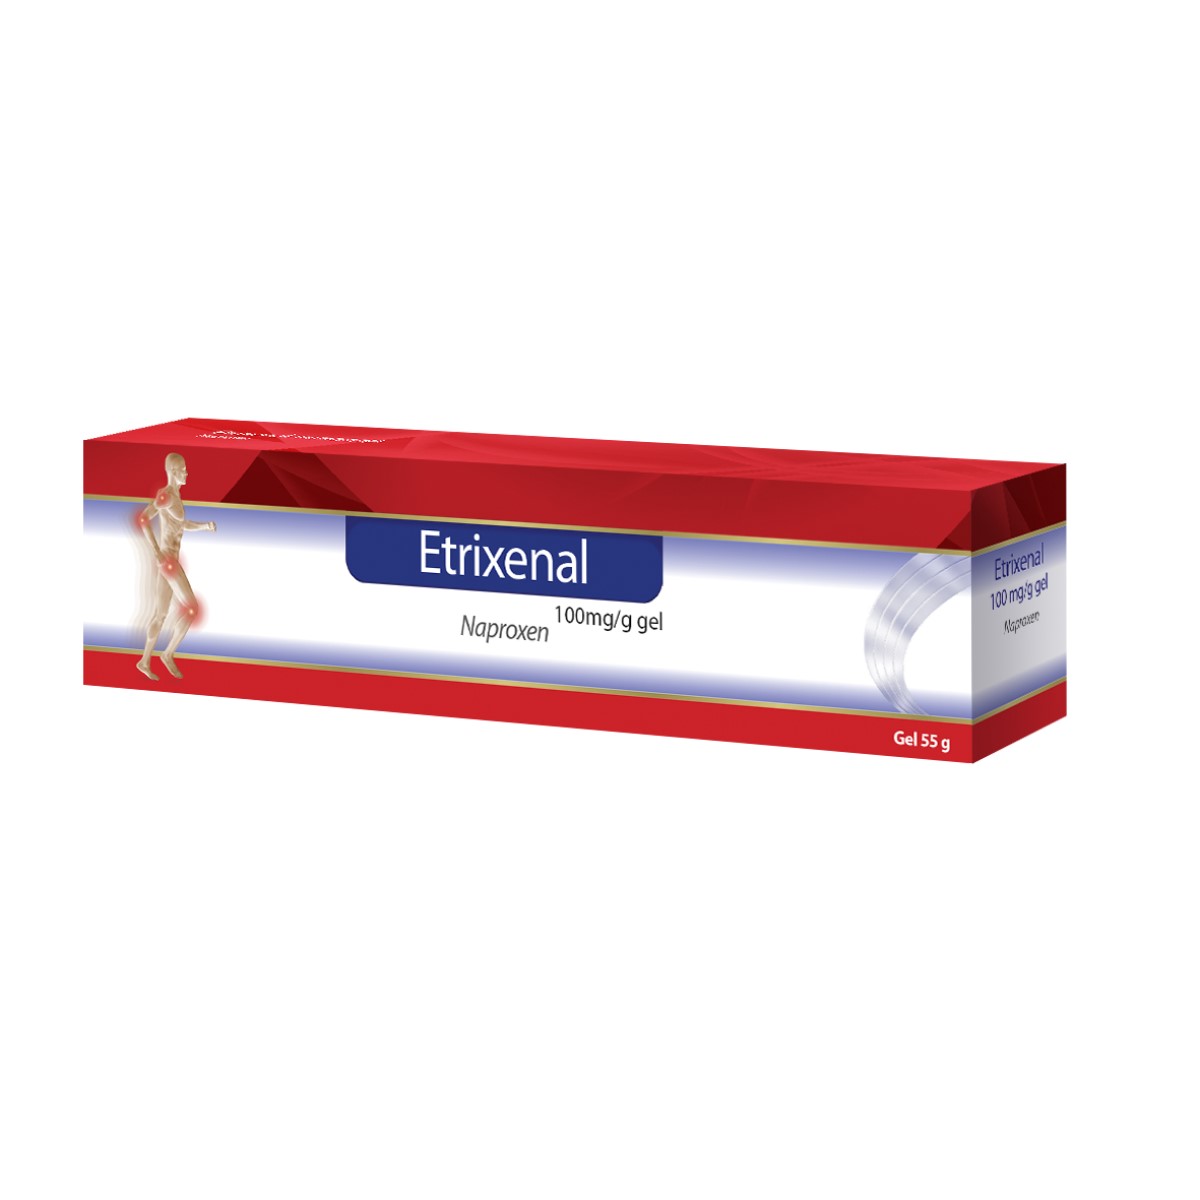 Creme,unguente - Etrixenal gel, 100 mg/g, 55 g, Walmark , nordpharm.ro